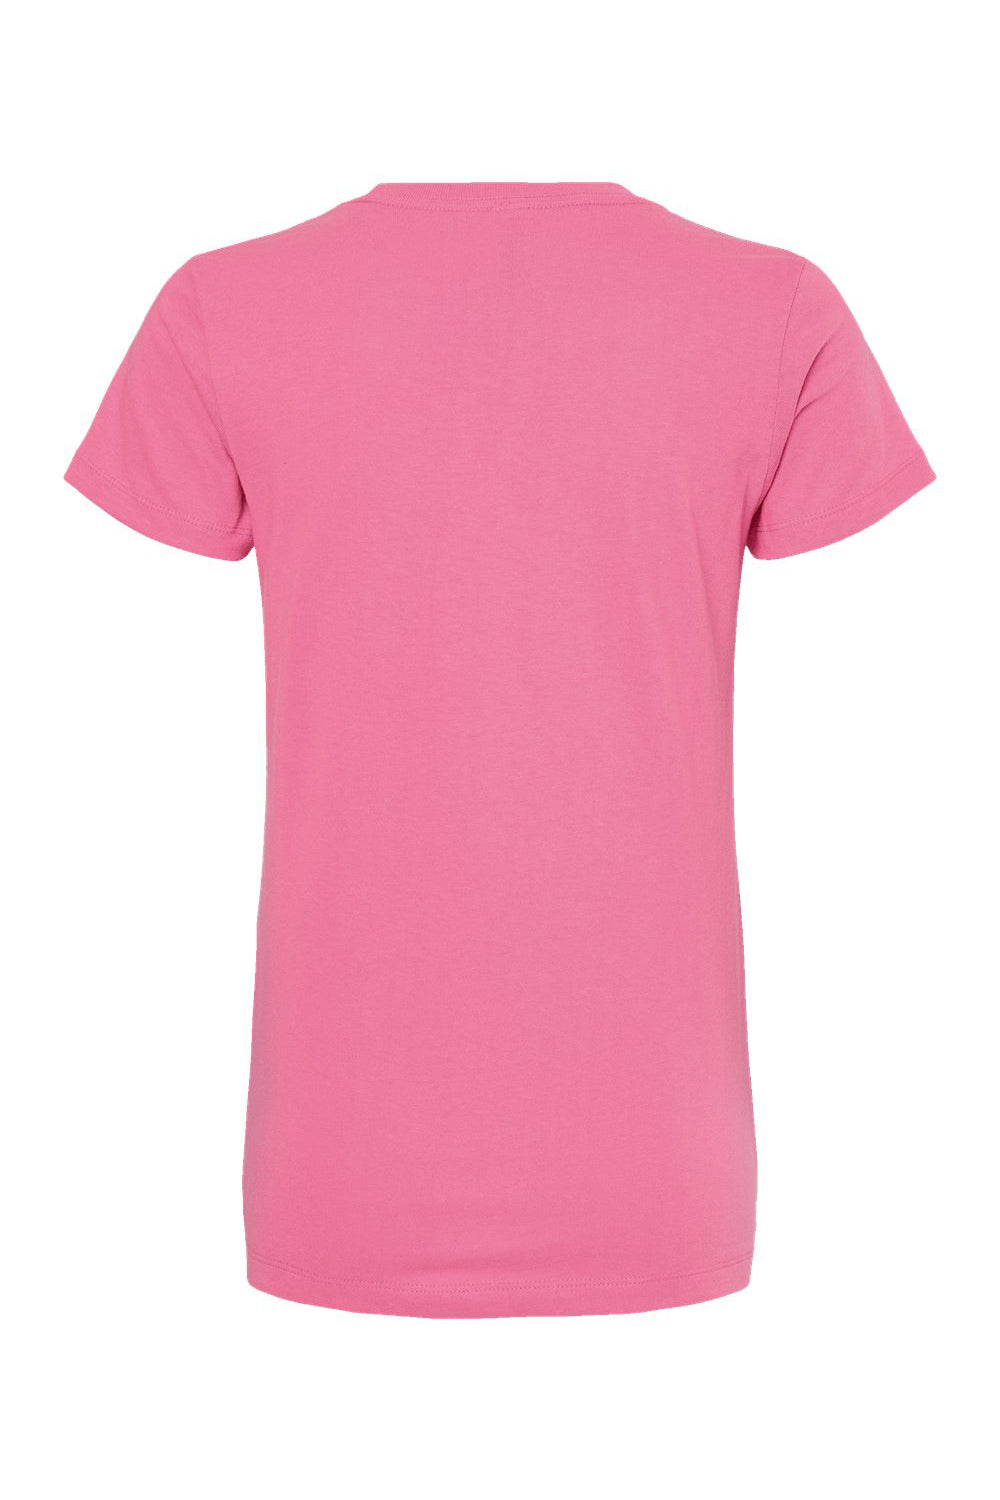 M&O 4810 Womens Gold Soft Touch Short Sleeve Crewneck T-Shirt Azalea Pink Flat Back